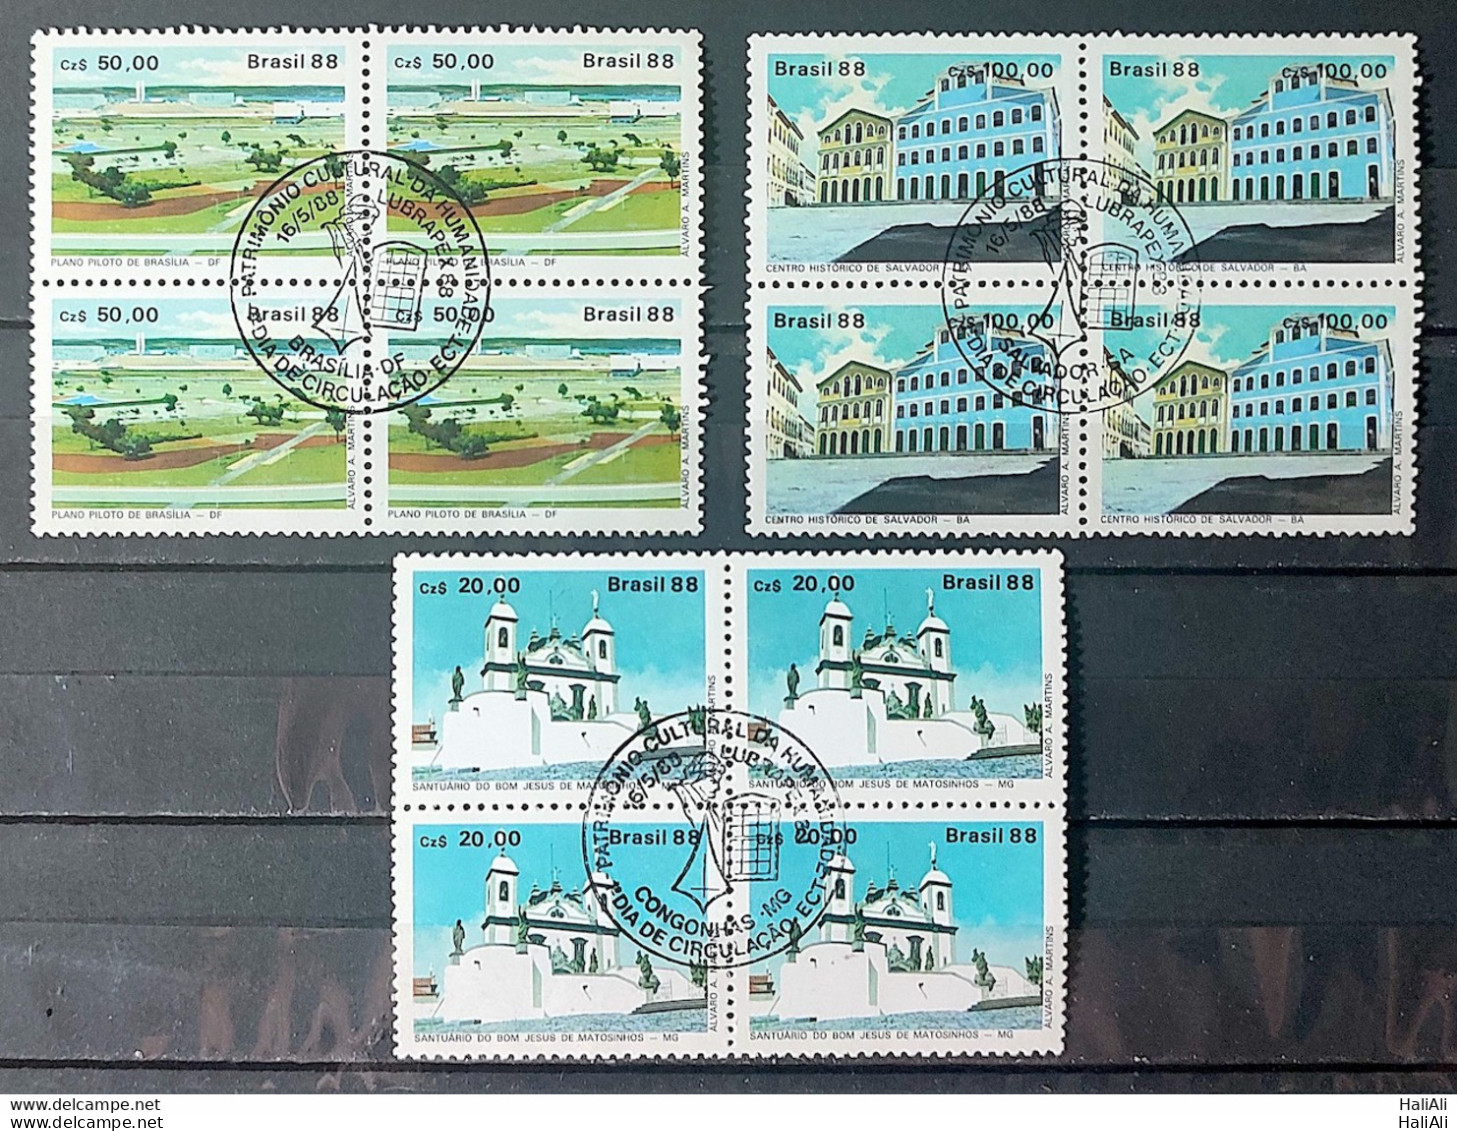 C 1585 Brazil Stamp Lubrapex Portugal Jorge Amado Brasilia 1988 Block Of 4 CBC MG DF BA Full Series - Nuevos